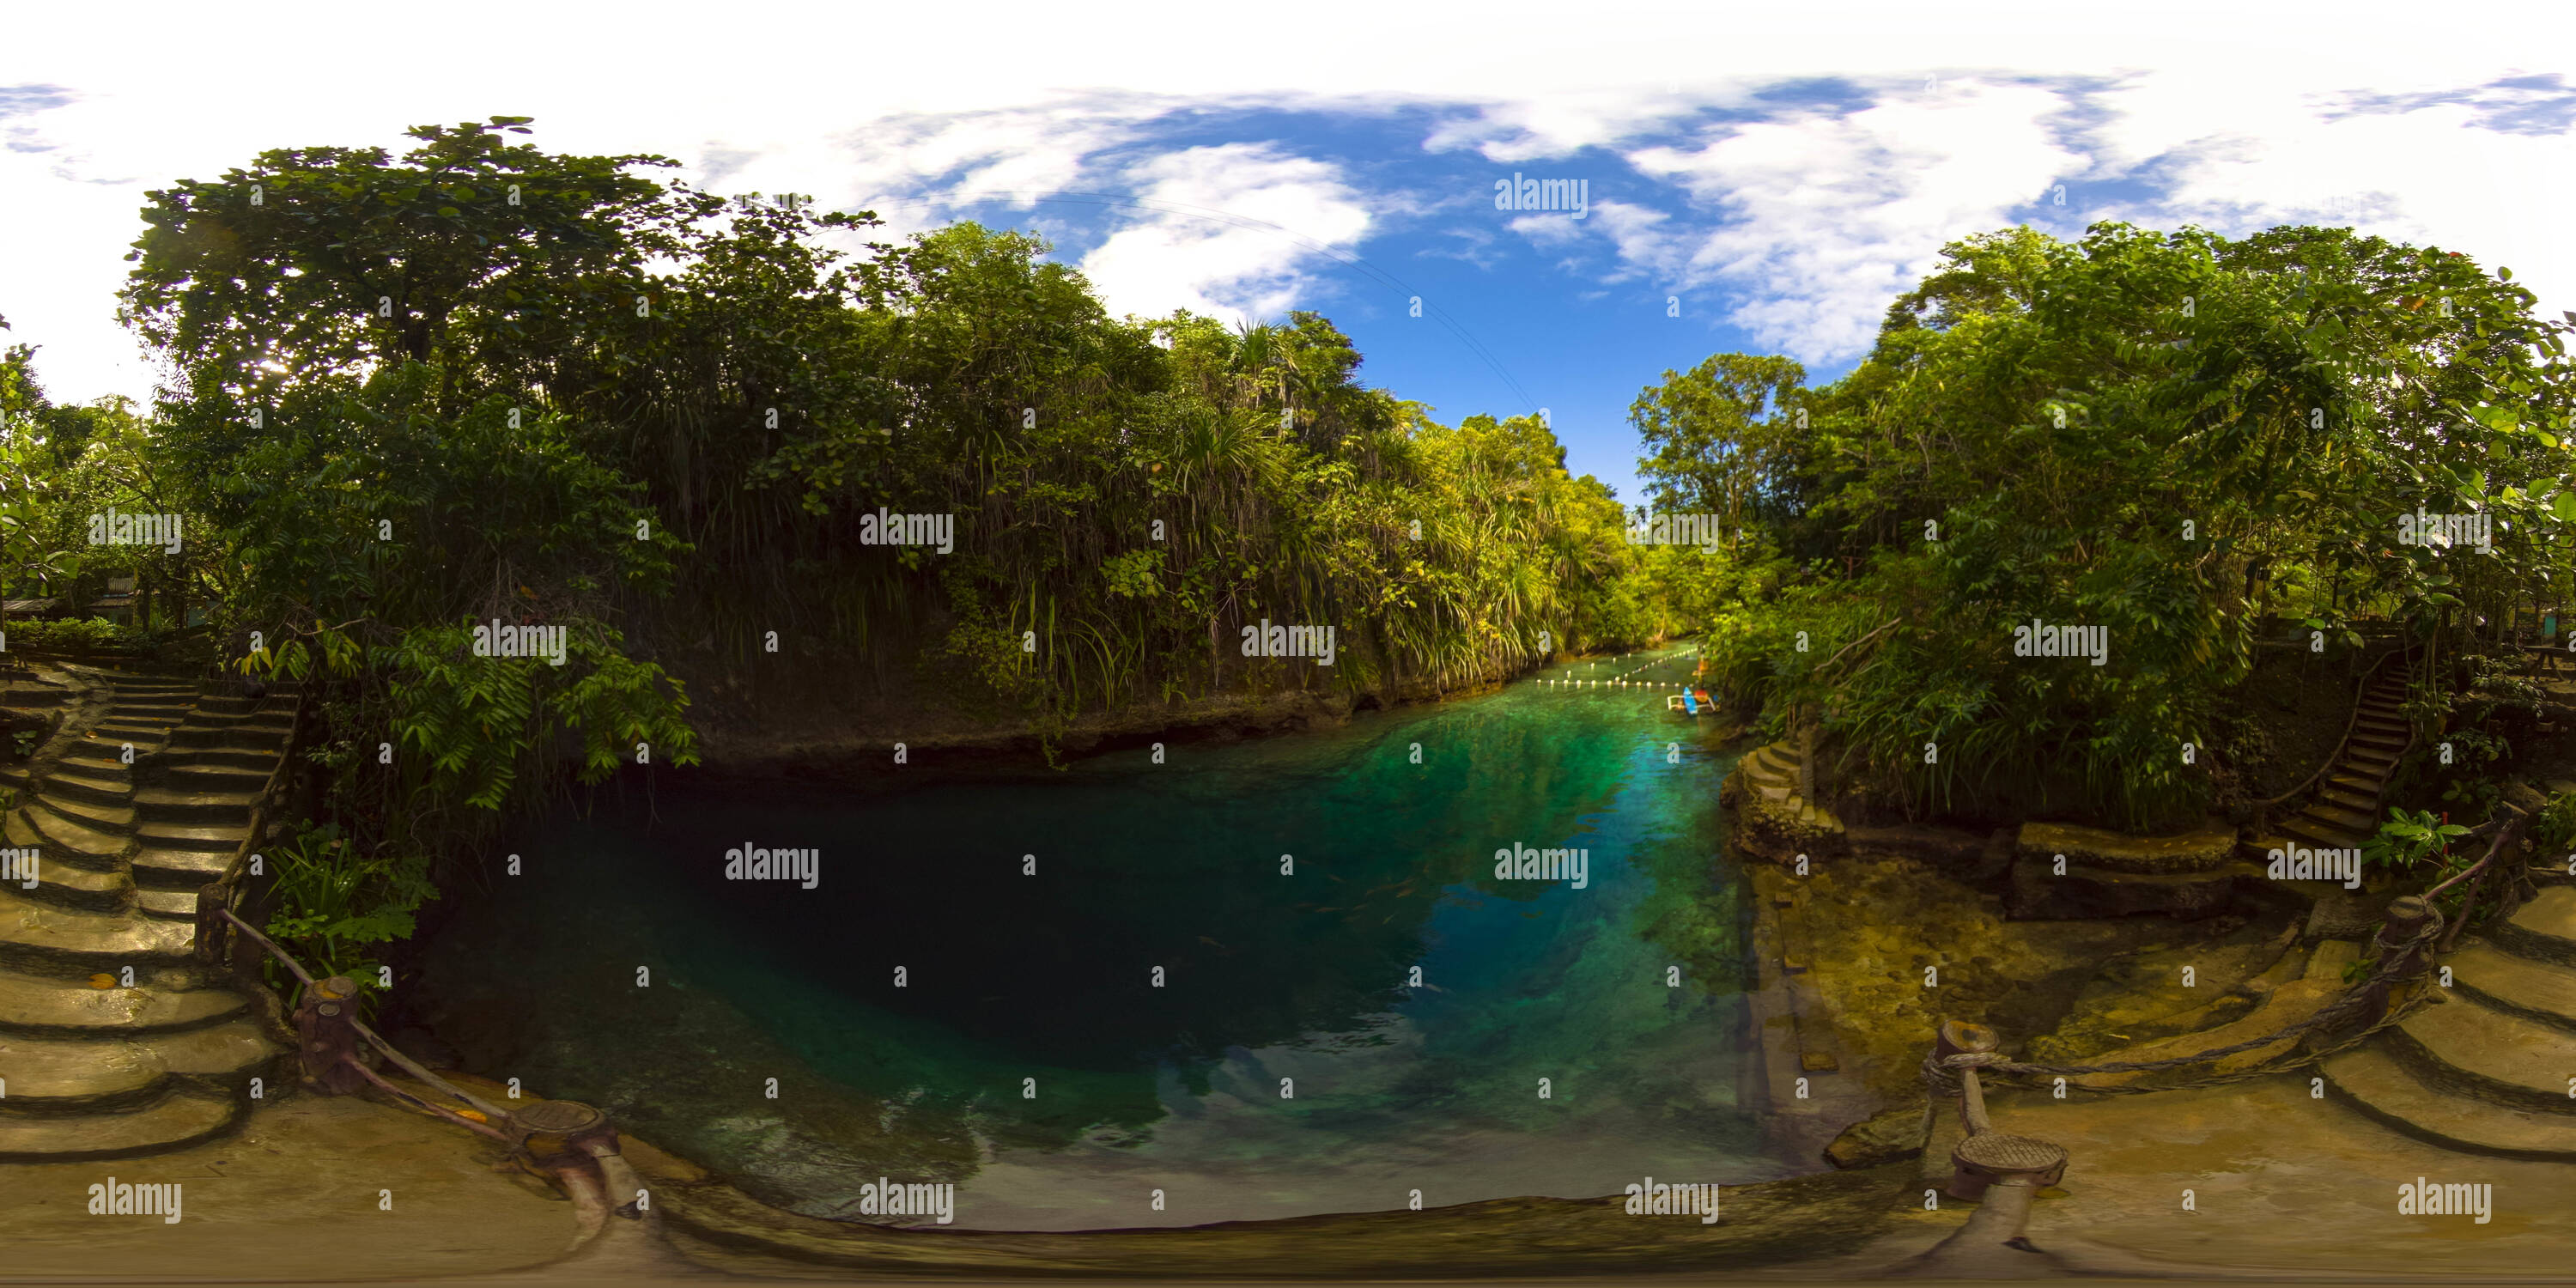 360 degree panoramic view of Enchanted River in Hinatuan, Surigao Del Sur, Philippines.